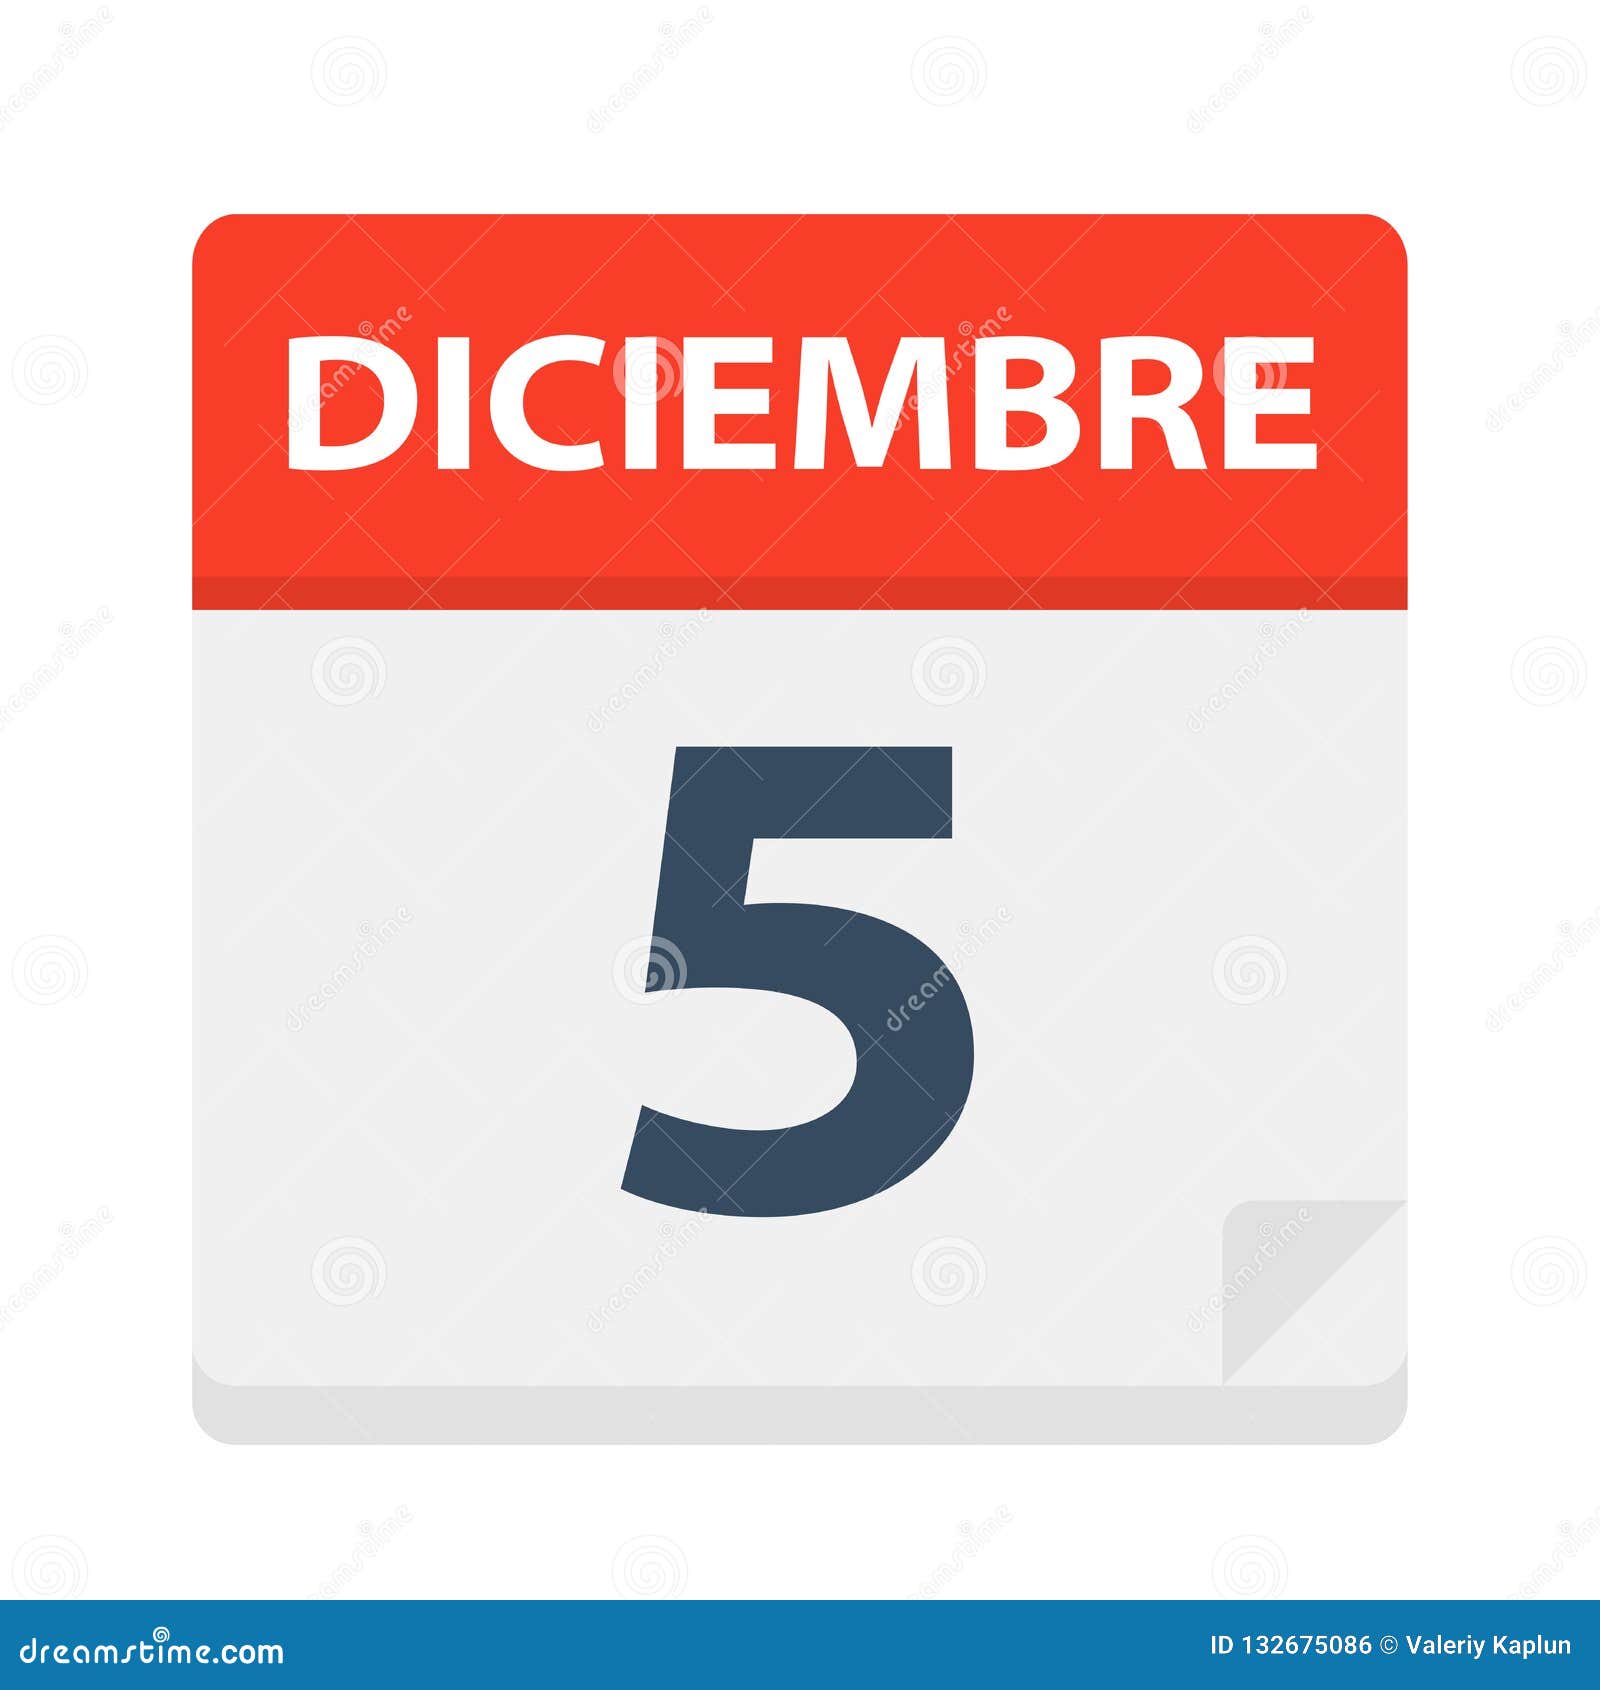 diciembre 5 - calendar icon - december 5.   of spanish calendar leaf